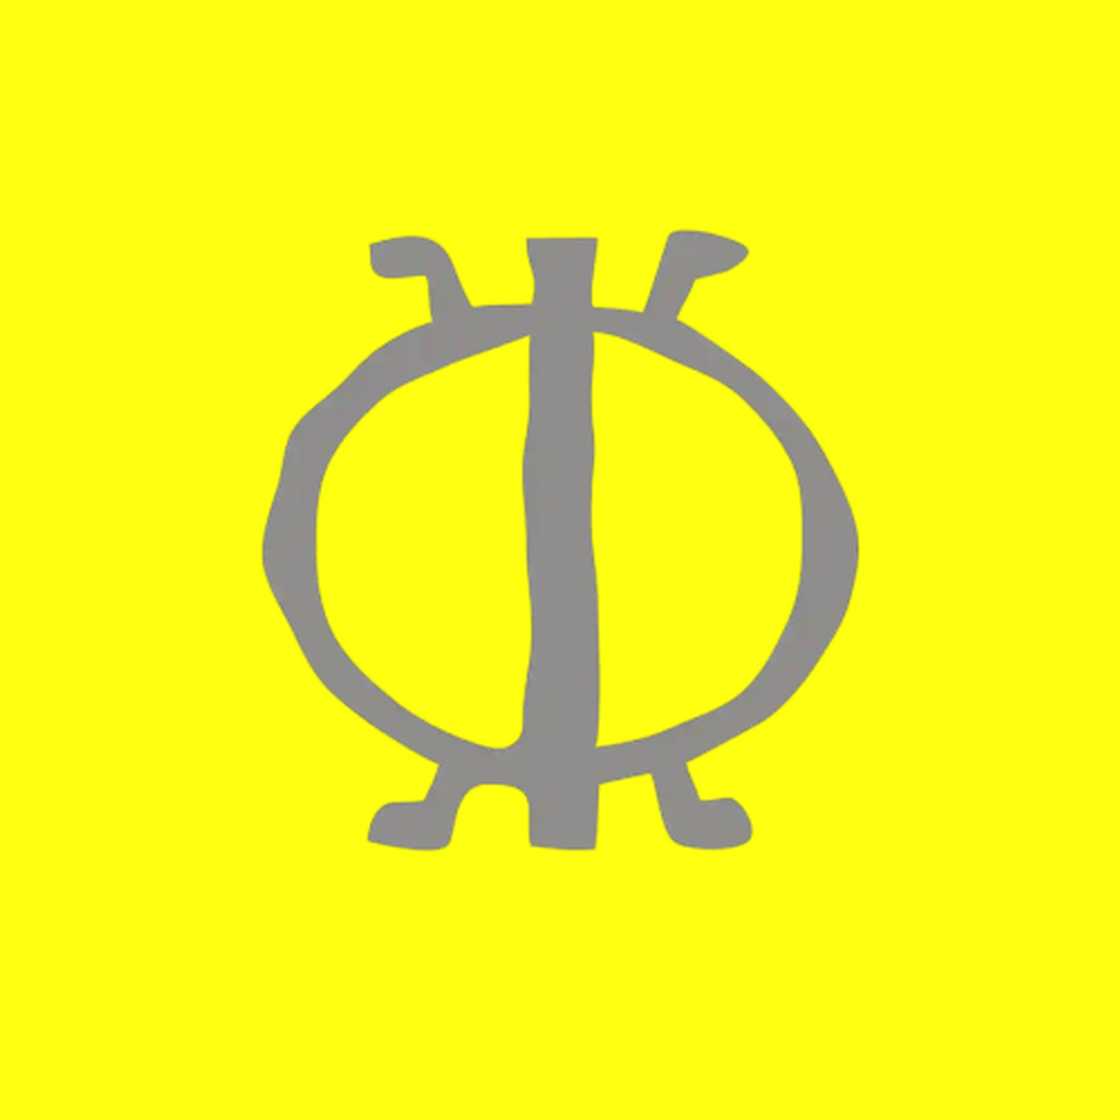 Adinkra symbols